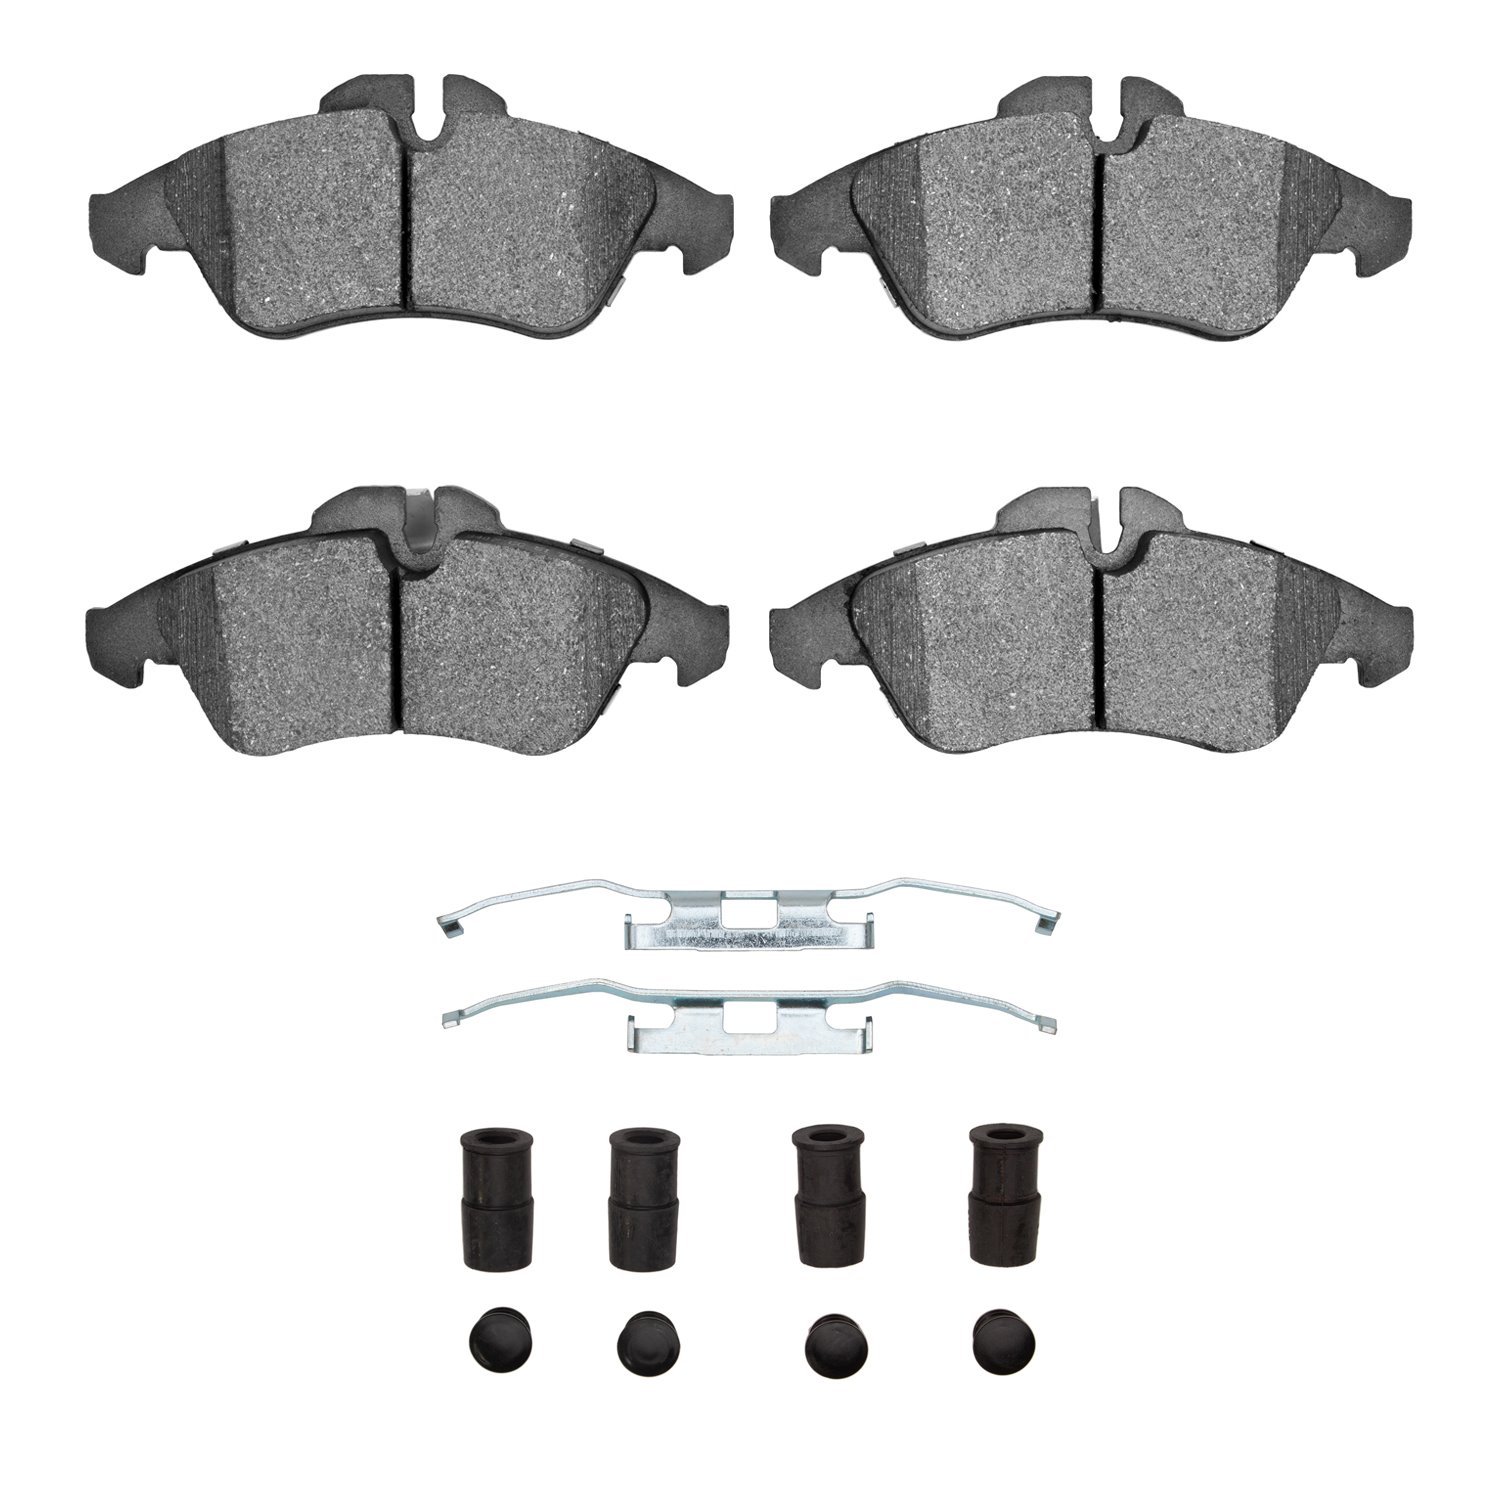 1311-1177-01 3000-Series Semi-Metallic Brake Pads & Hardware Kit, 2002-2006 Multiple Makes/Models, Position: Fr,Front